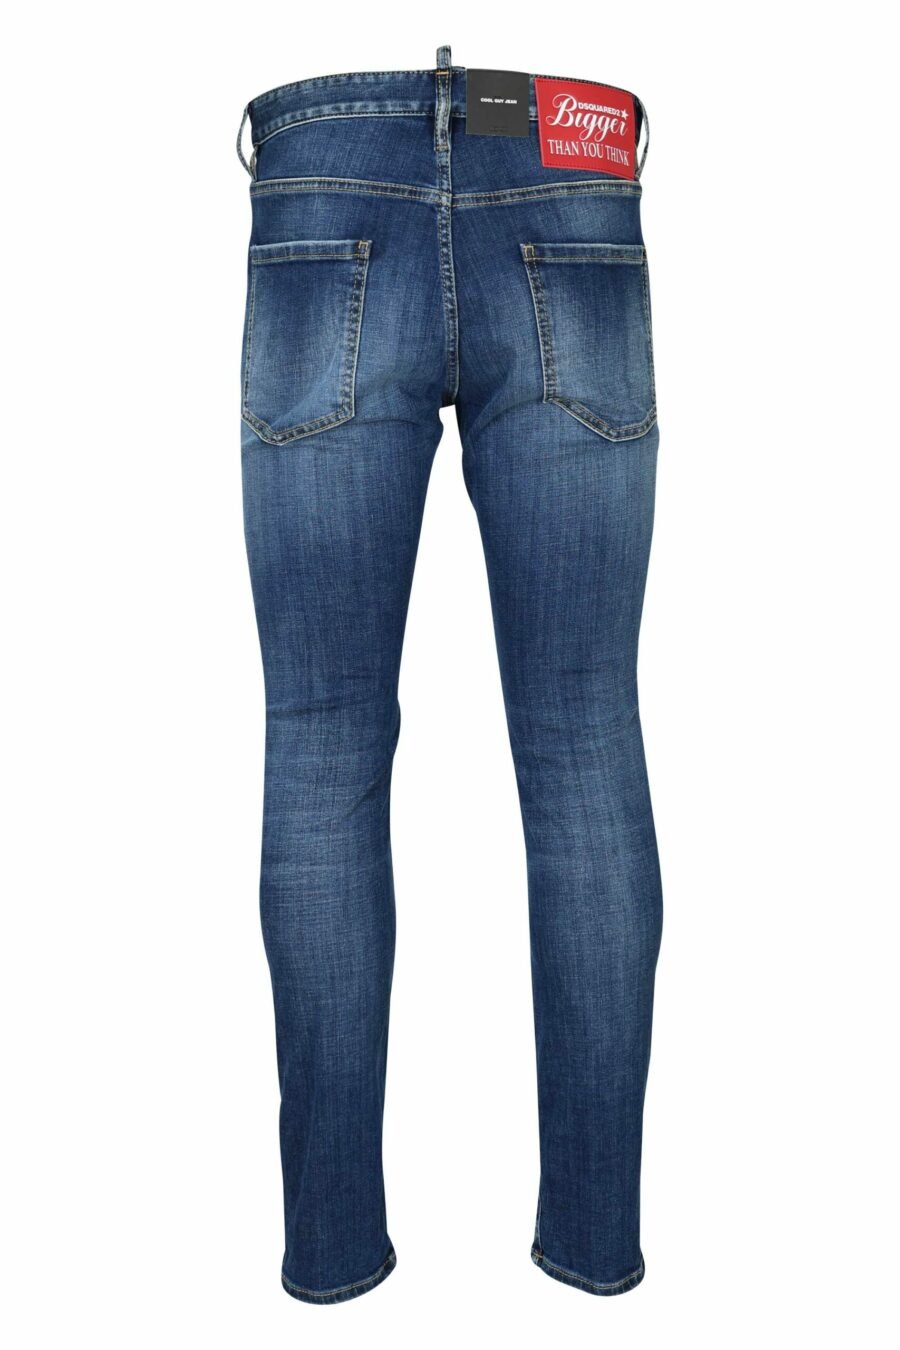 Pantalon en denim bleu "cool guy jean" semi-transparent - 8054148476557 1 échelle